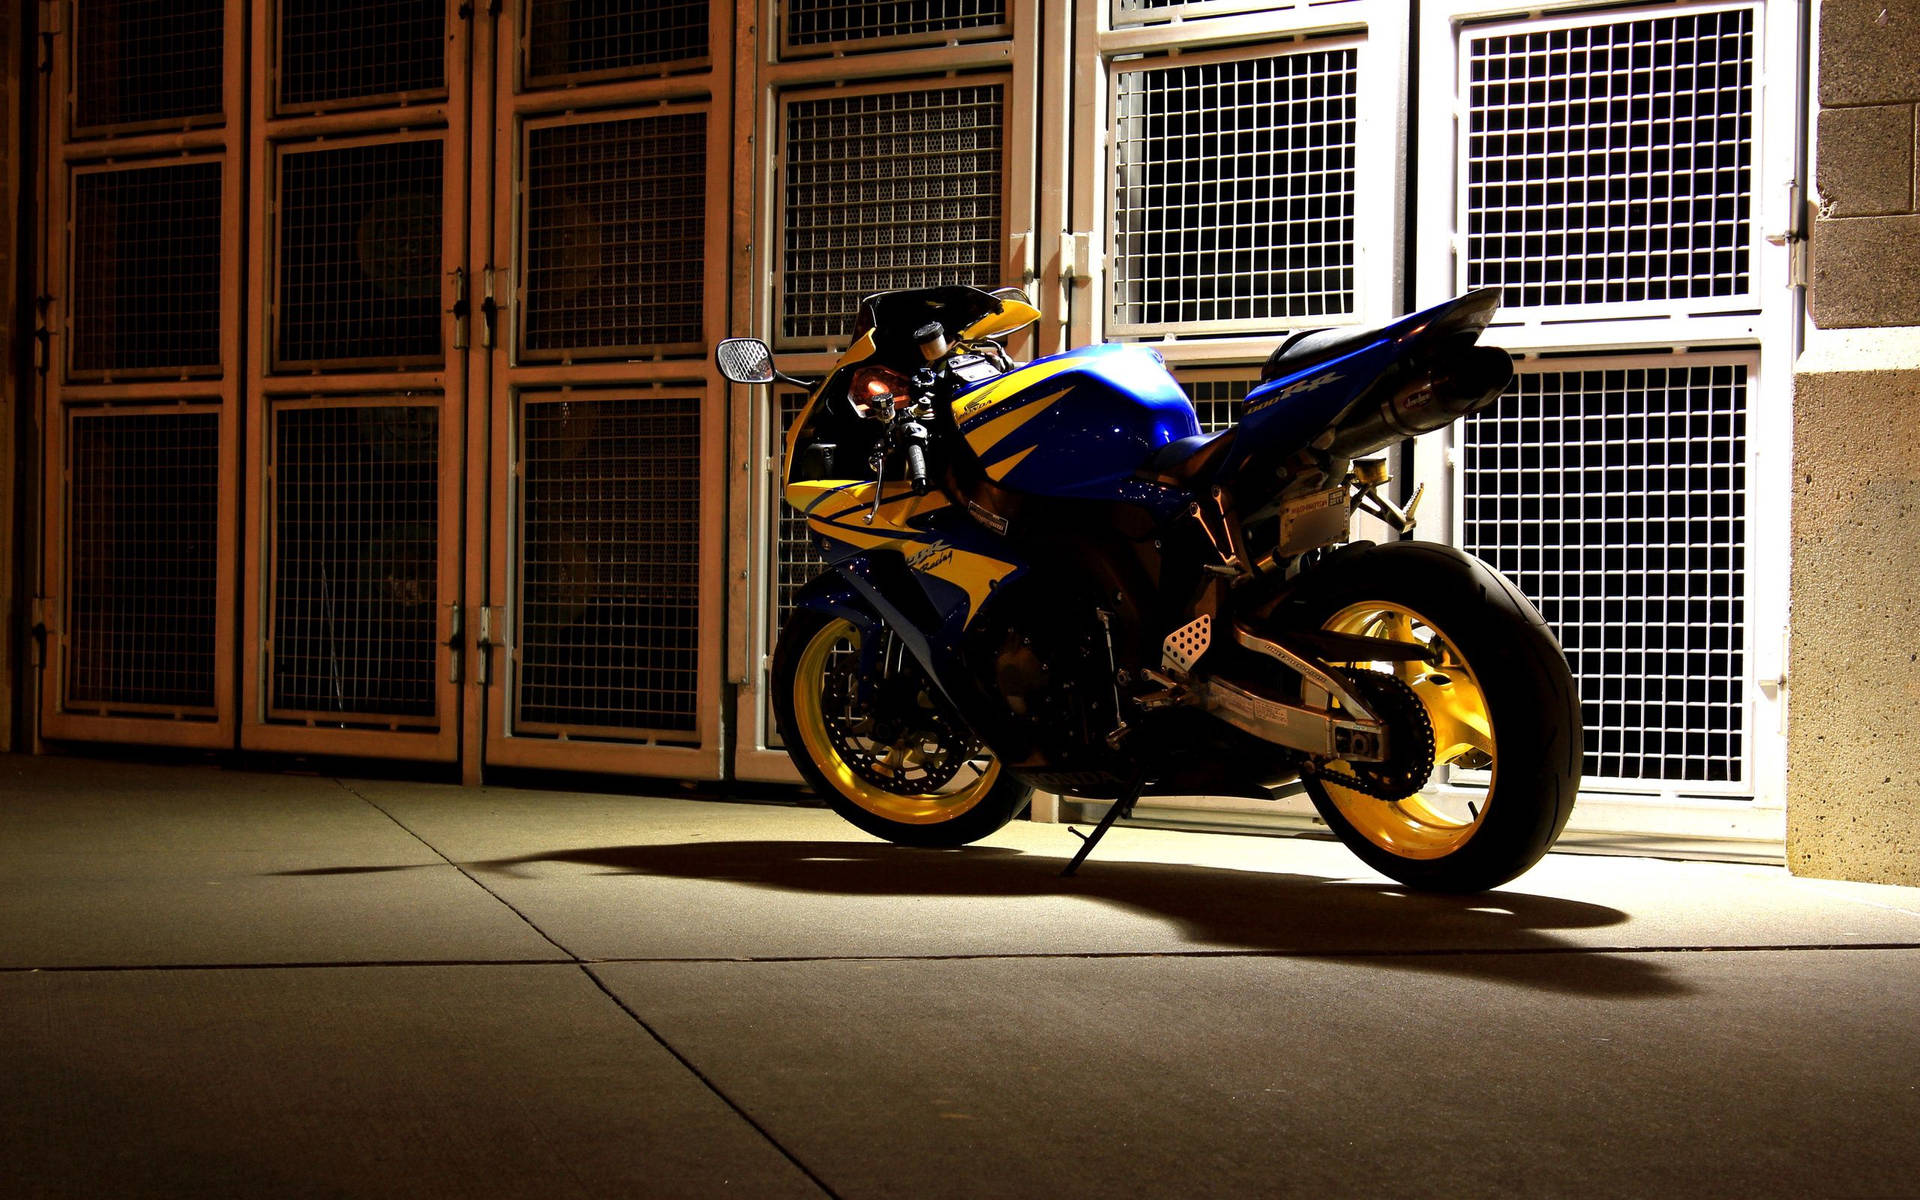 Motorcycle 2560X1600 wallpaper